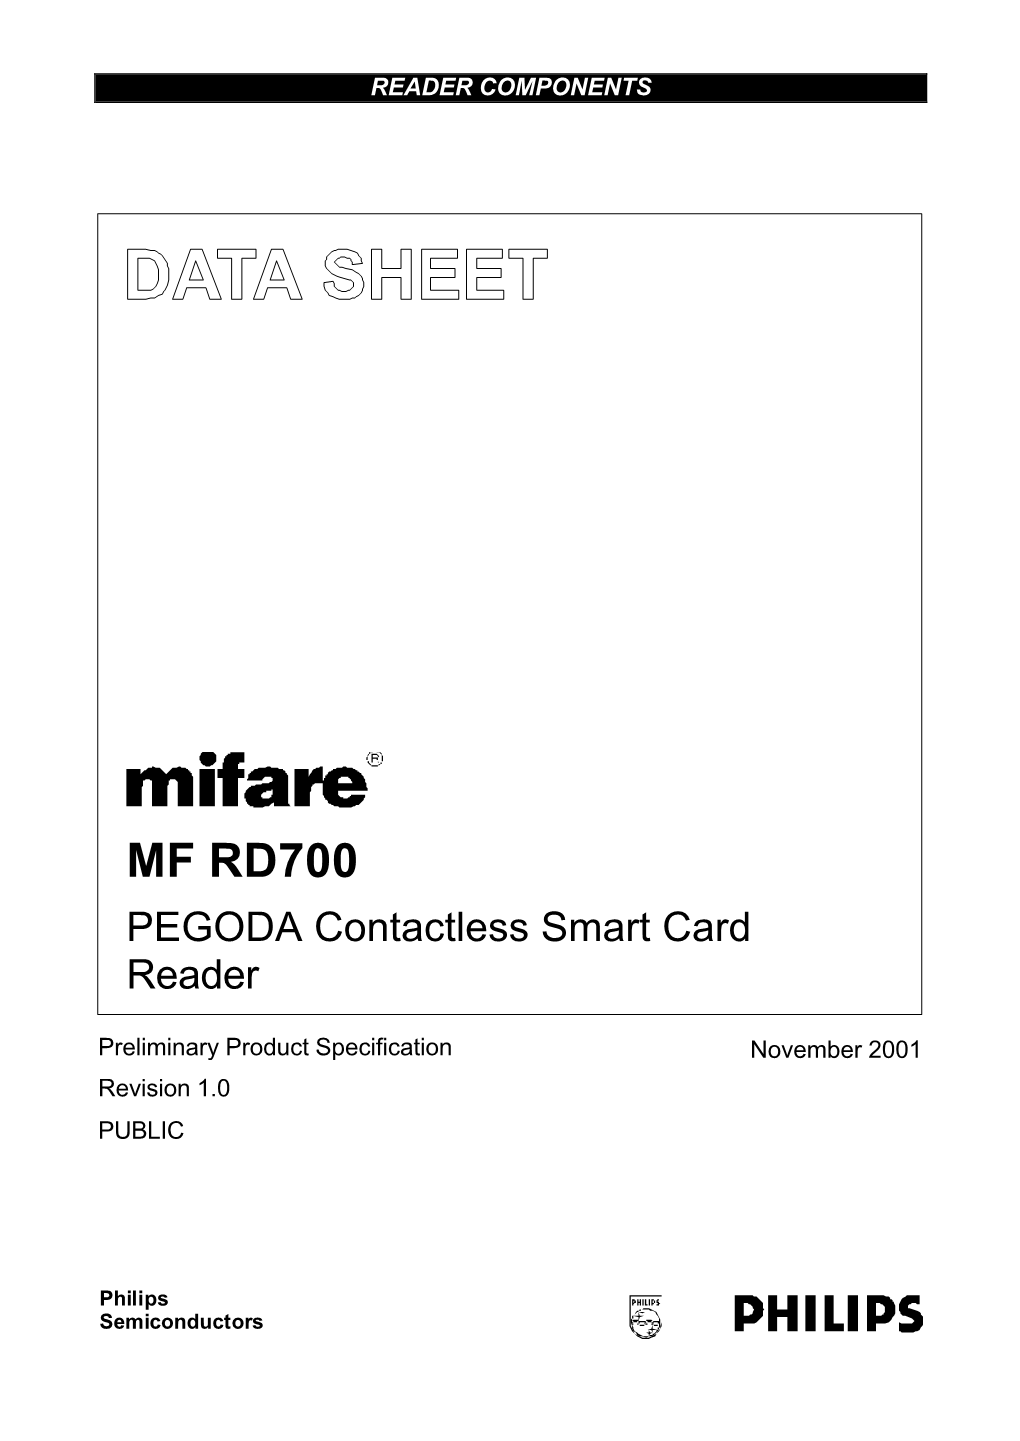 MF RD700 PEGODA Contactless Smart Card Reader